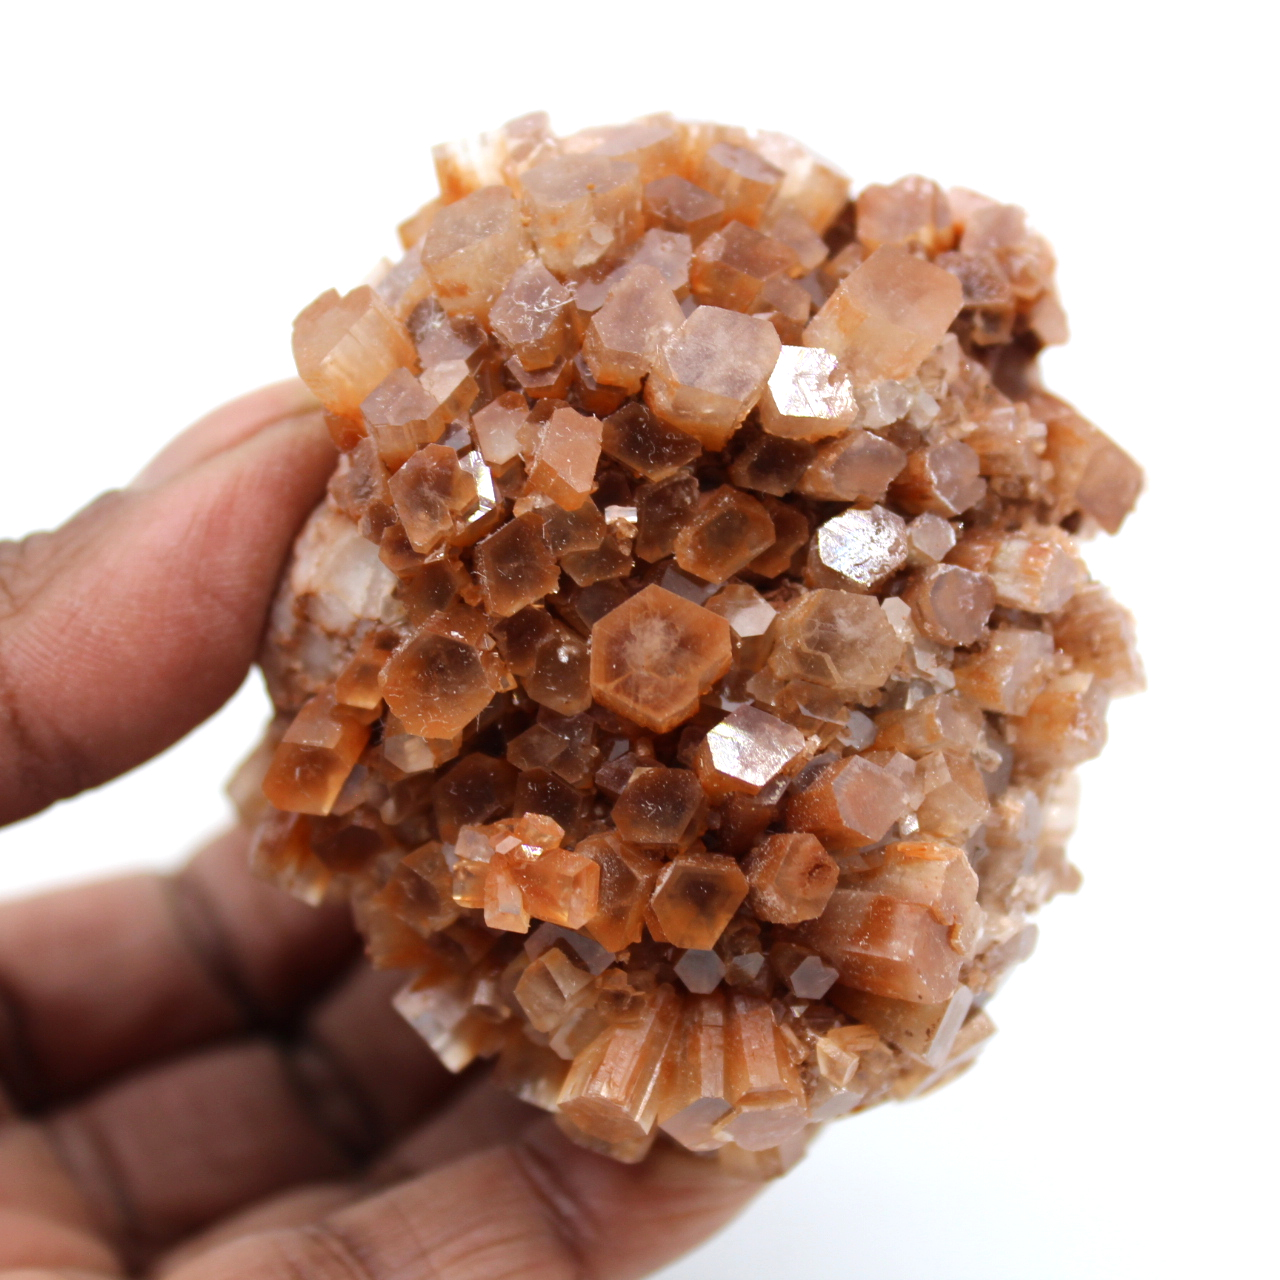 Crystallized aragonite